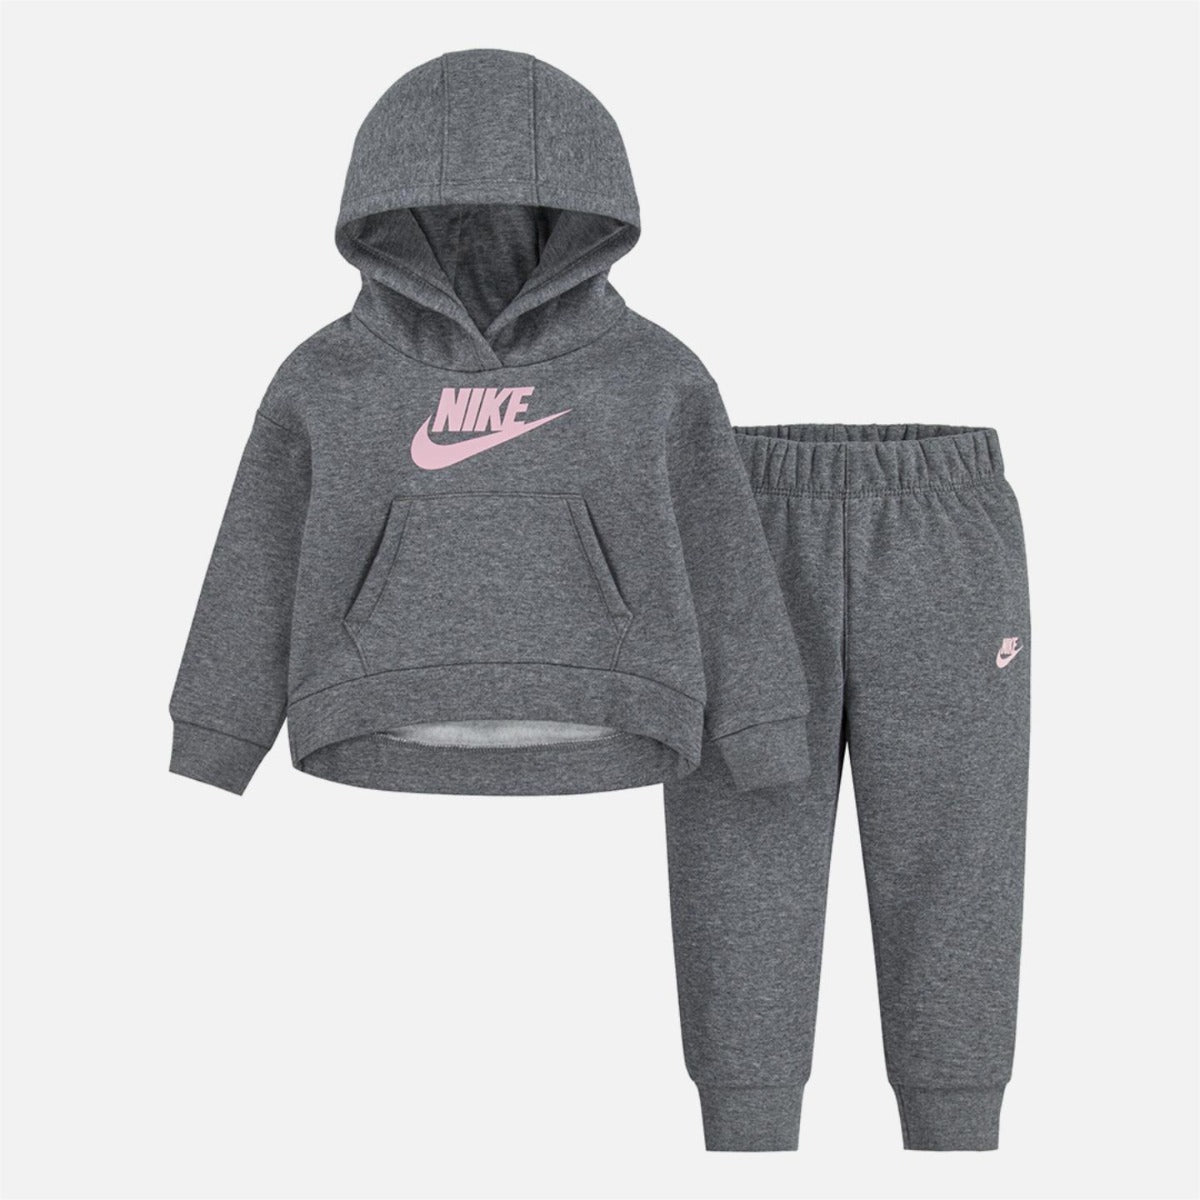 Nike Baby Tracksuit Set - Grey/Pink